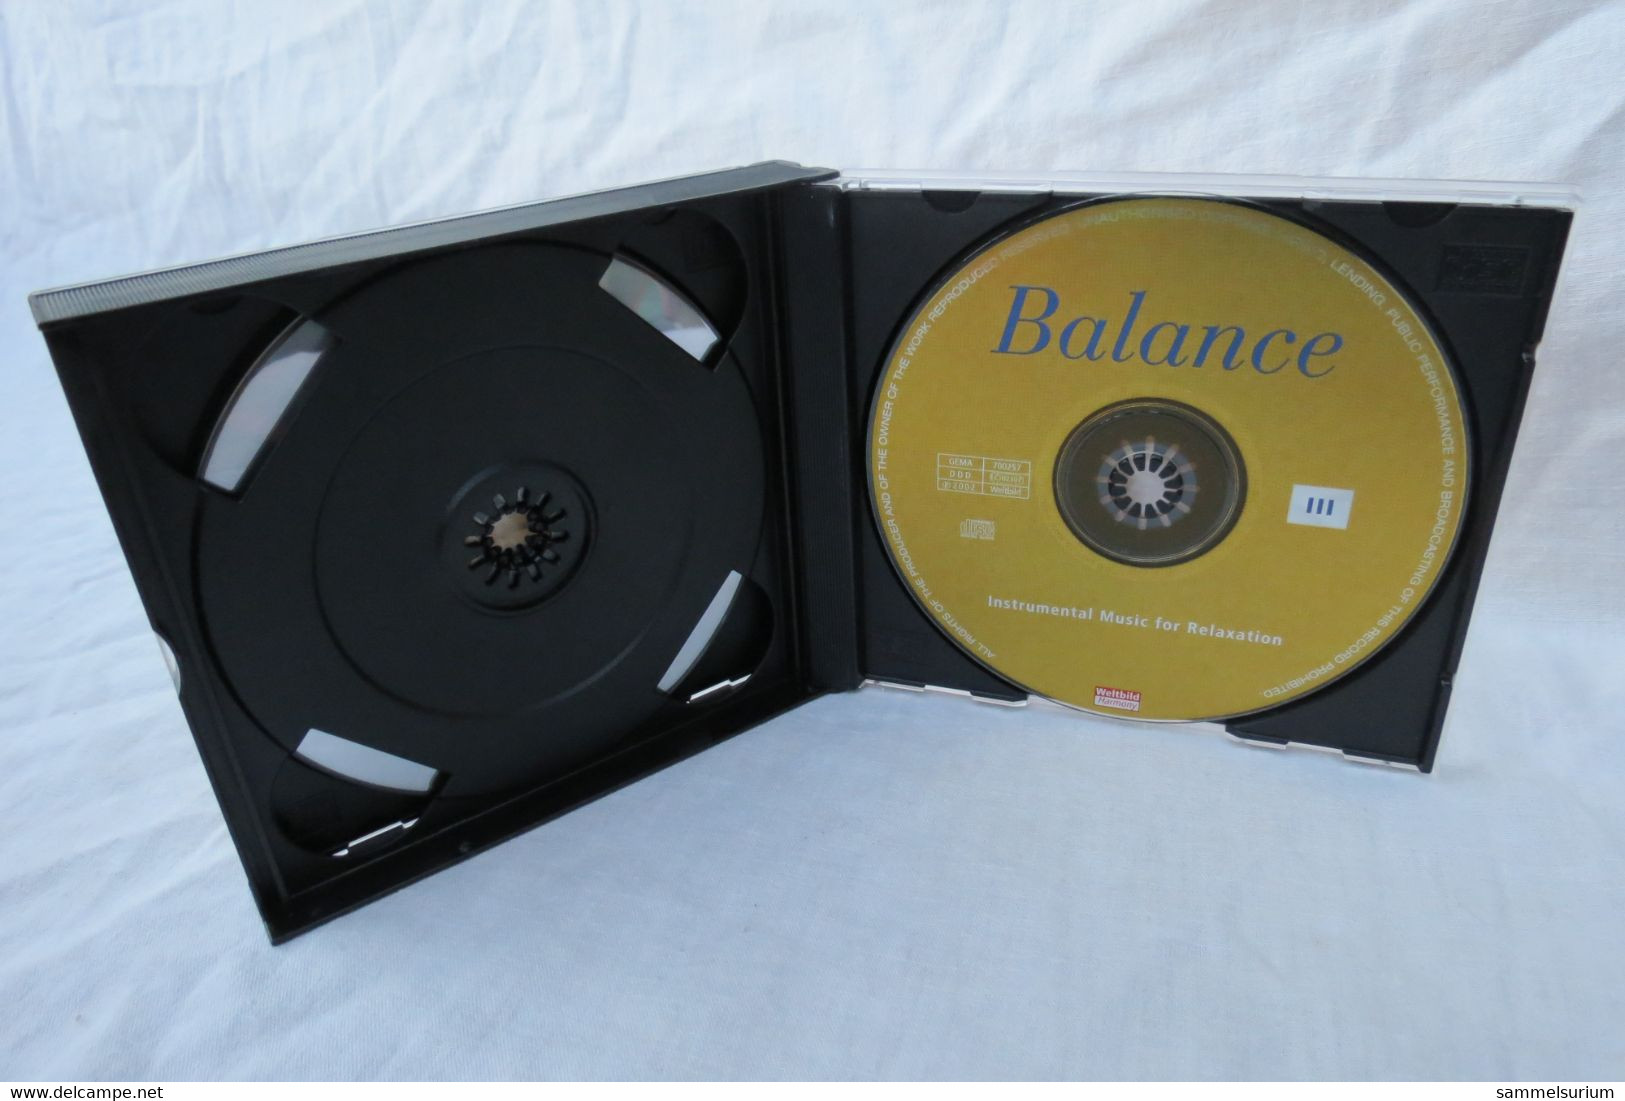 3 CDs "Balance" Instrumental Music For Relaxation - Instrumental